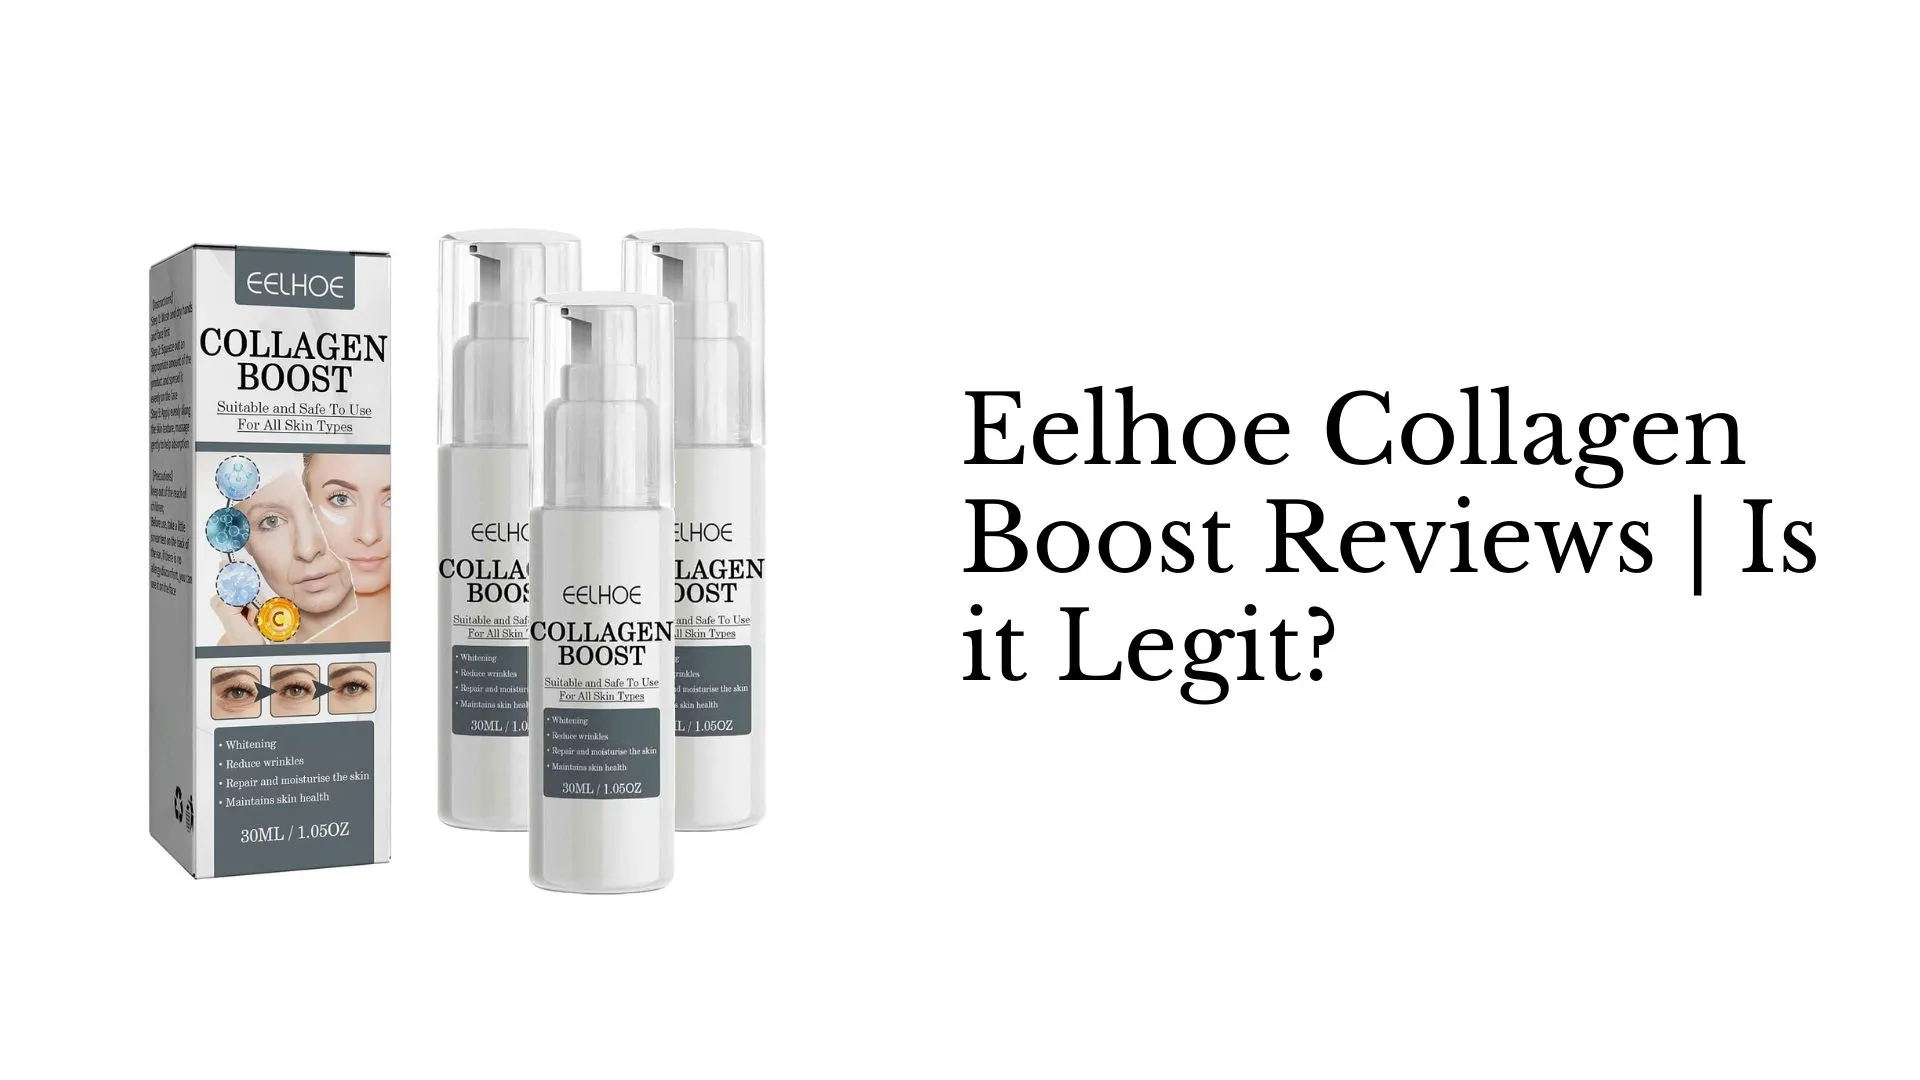 Eelhoe Collagen Boost Reviews Is it Legit